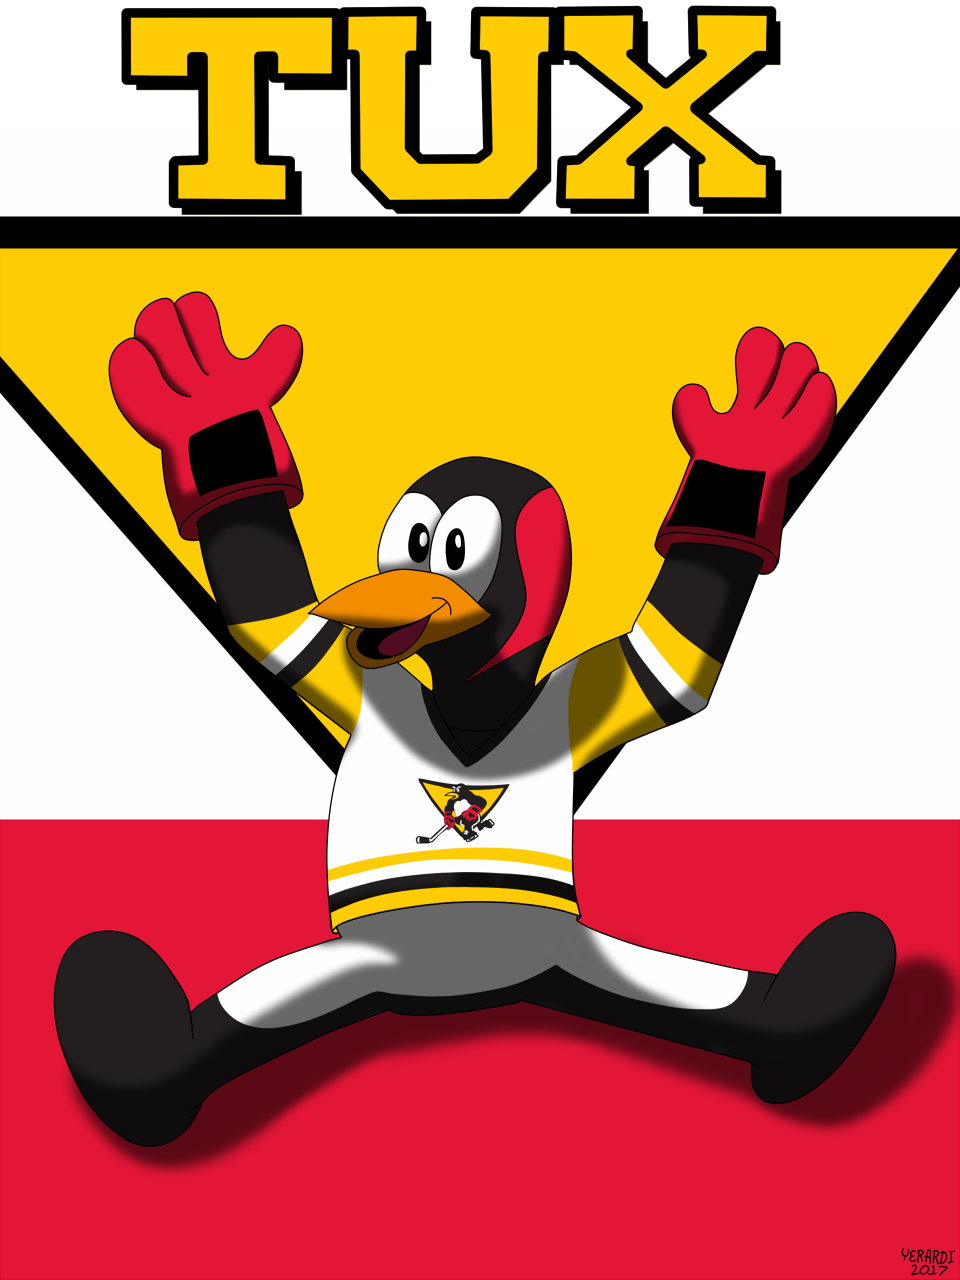 Intermission bonding w Tux <3 #wbspenguins #tux #mascot #ahl #trend #t